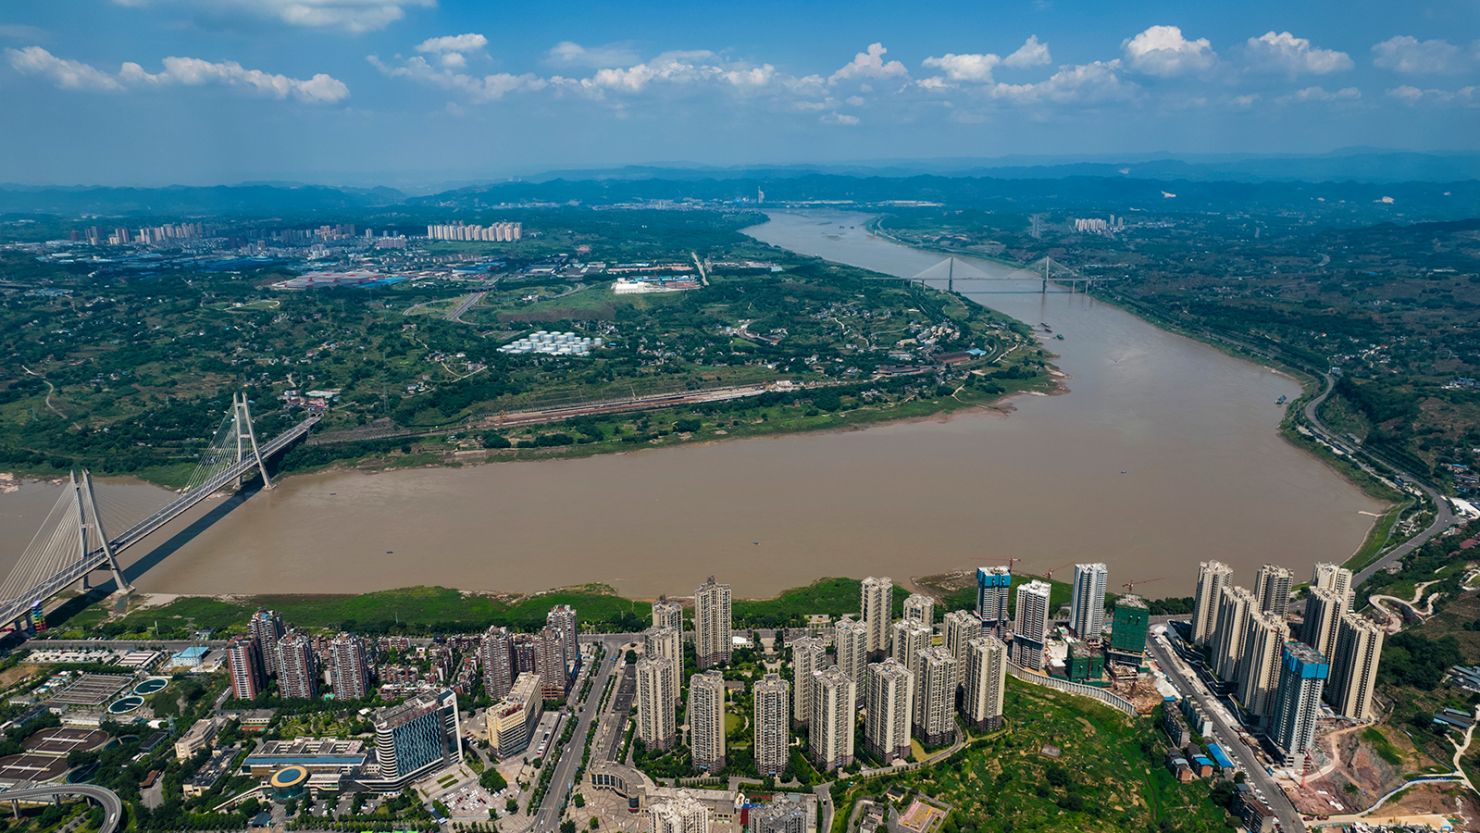 An aerial view of Chongqing, China.